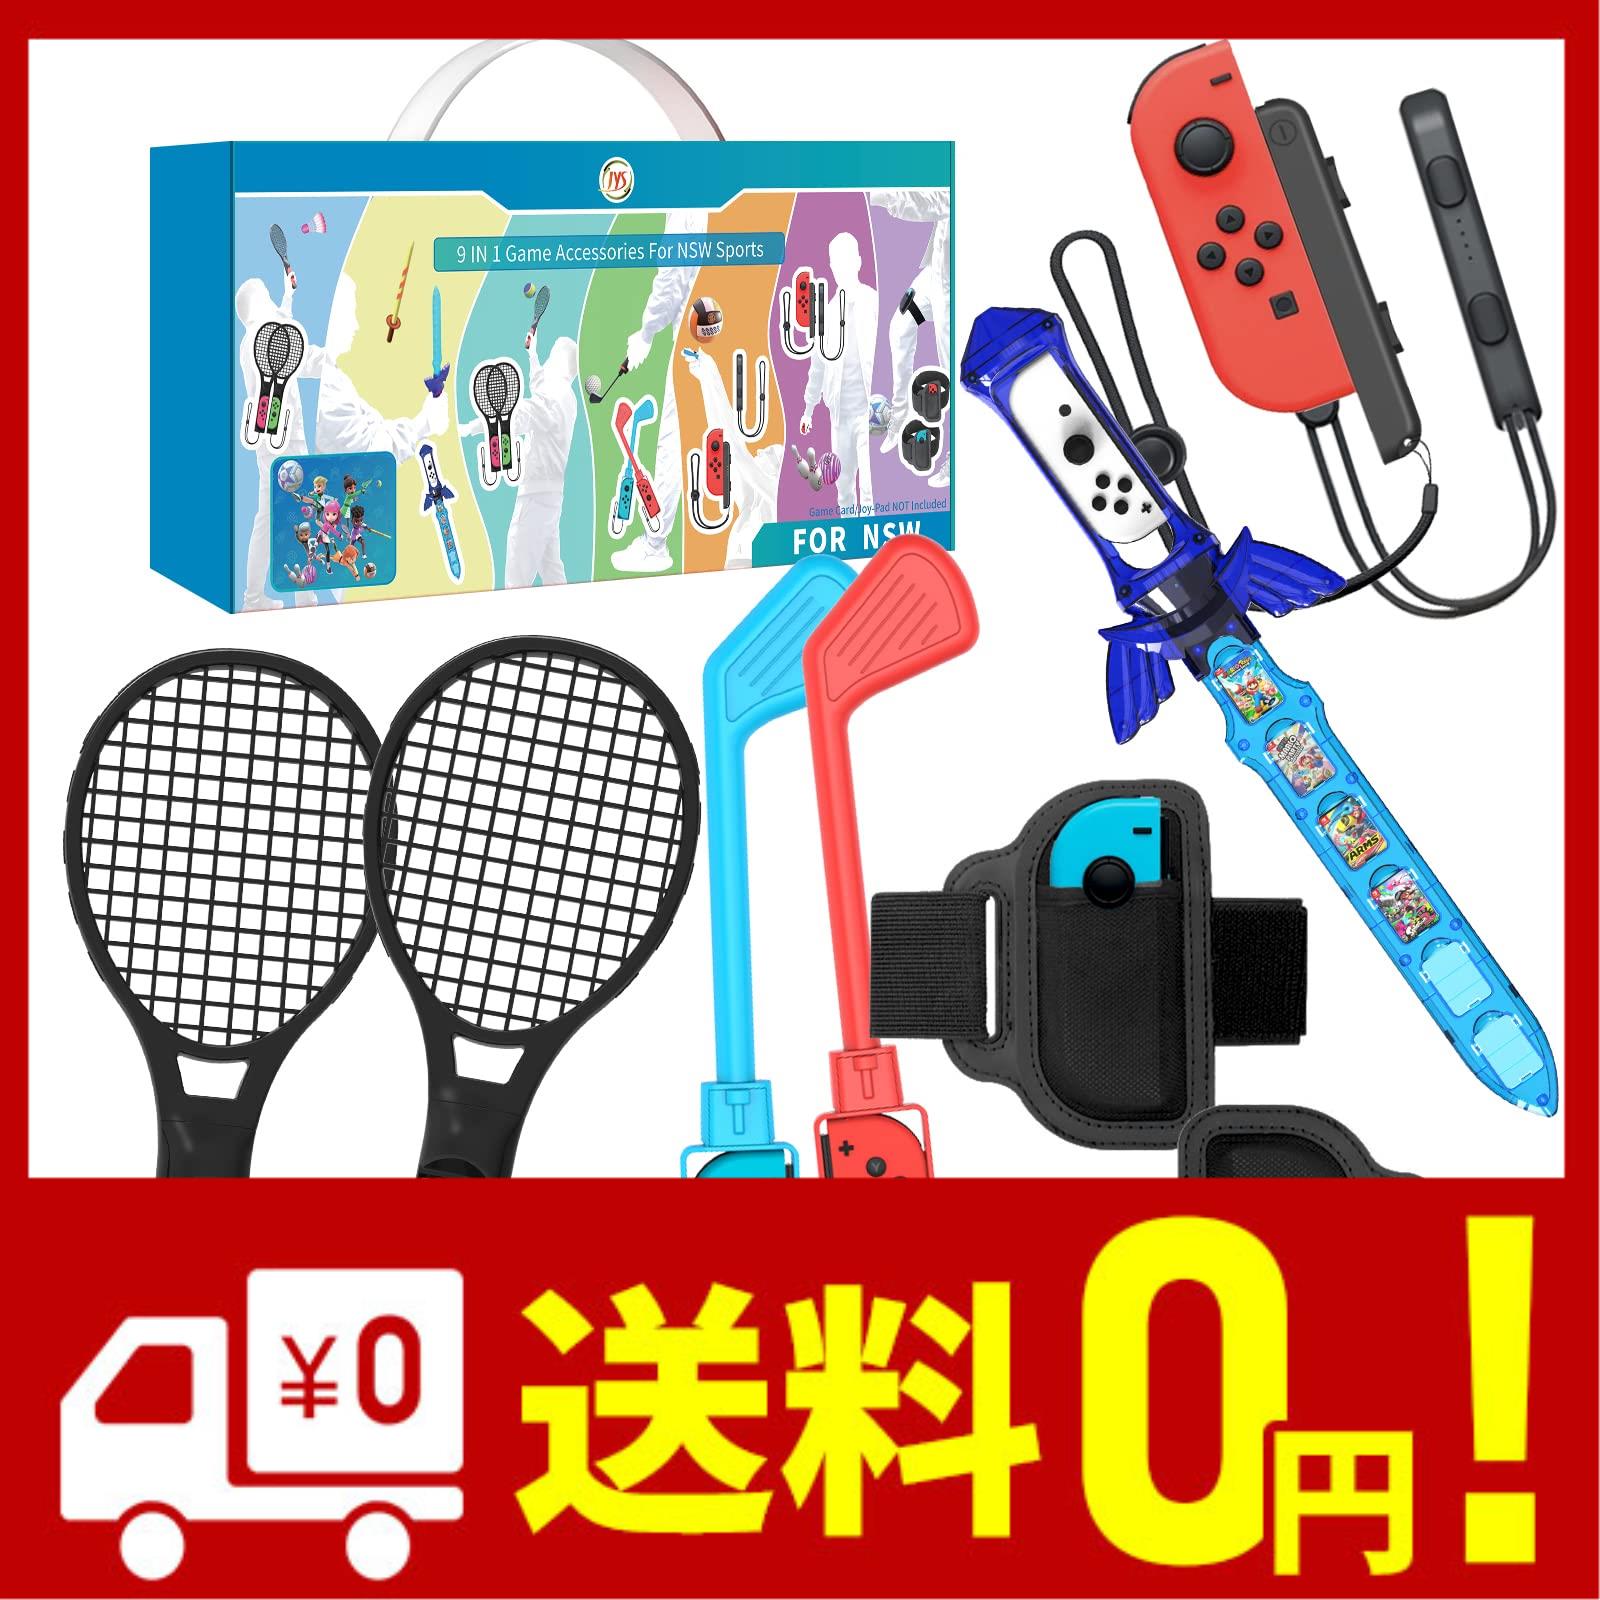 JOYTORN ニンテンドー スイッチスポーツ用アクセサリ 9-in-1 セット Nintendo Switch Sports用周辺機器 Joy-Conアタッチメント レッグ